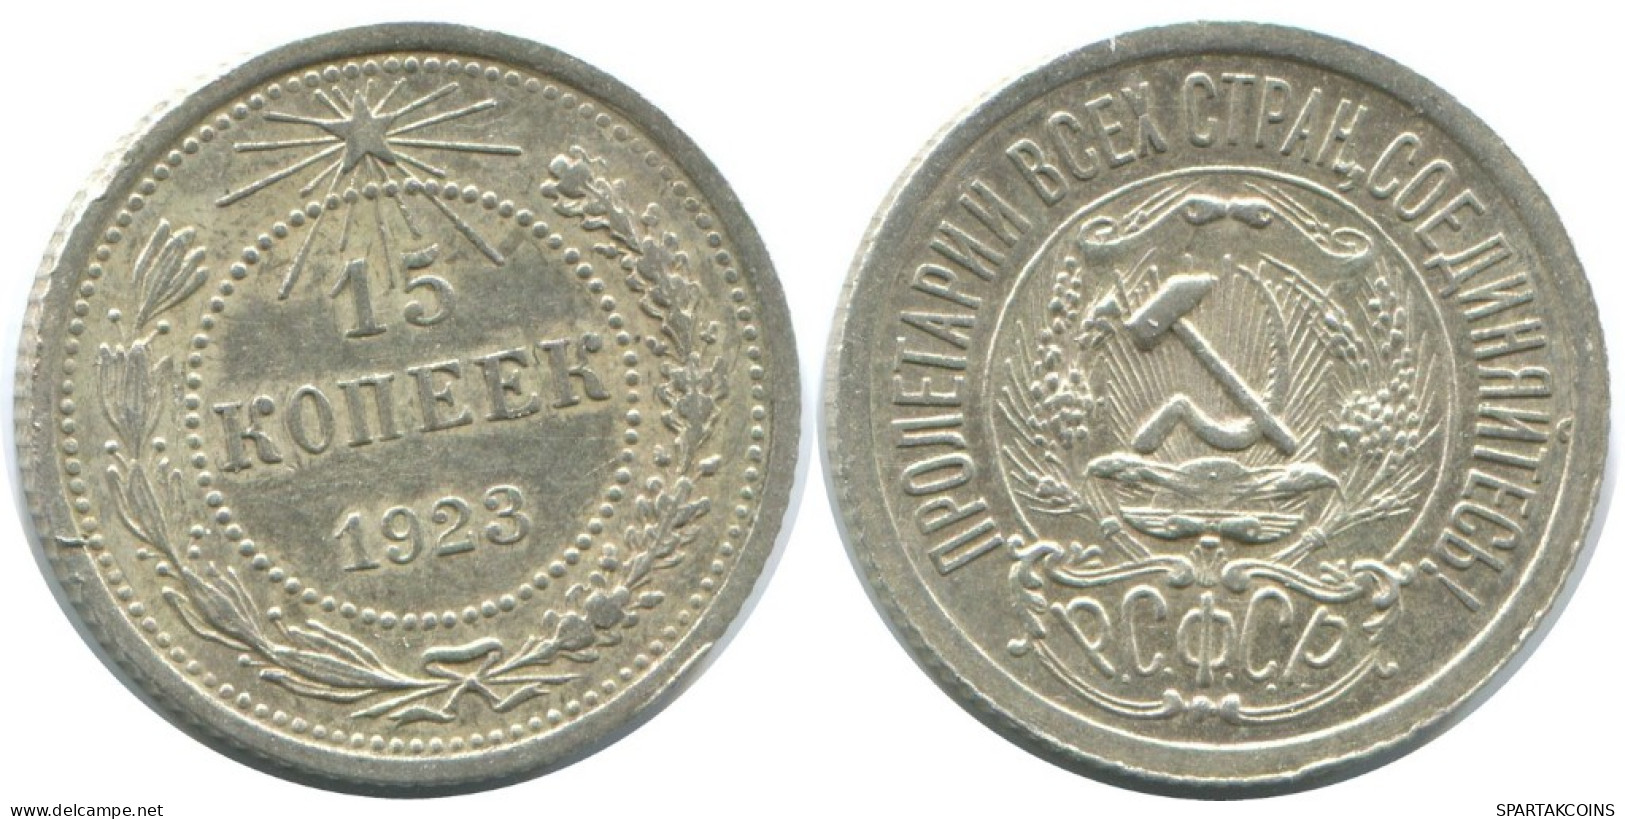 15 KOPEKS 1923 RUSSIA RSFSR SILVER Coin HIGH GRADE #AF077.4.U.A - Russia